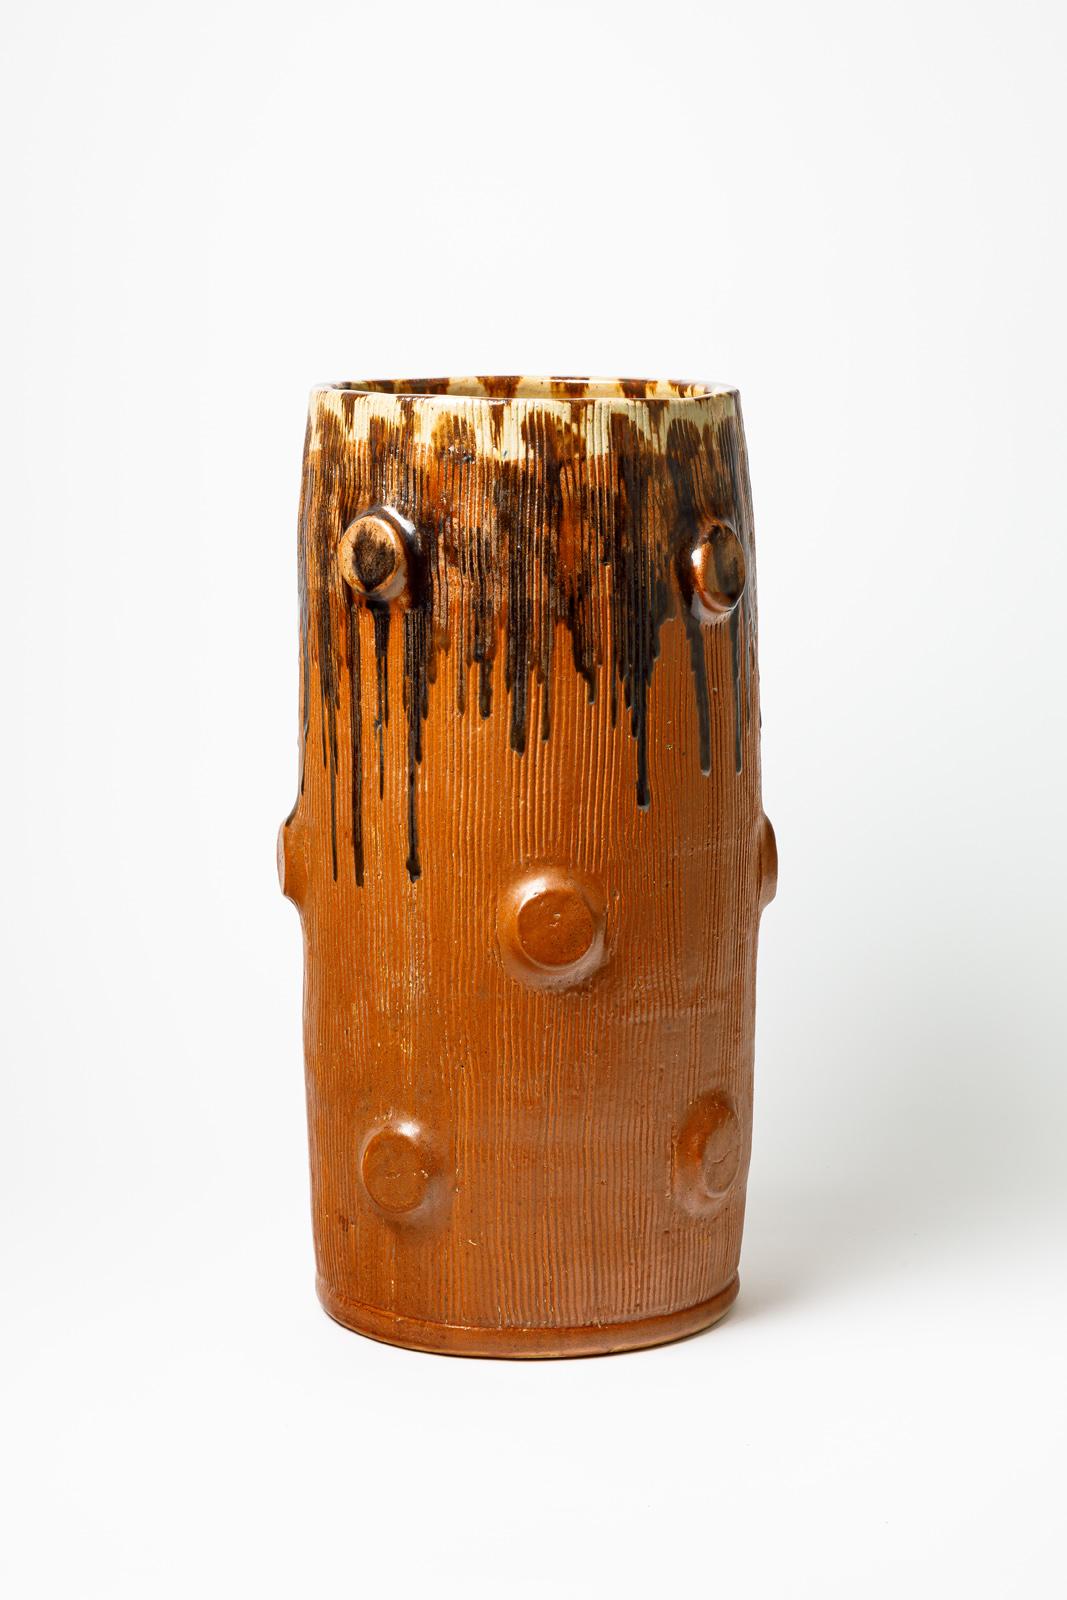 Orange and brown glazed ceramic vase by Joseph Talbot.
Artist’s monogram under the base. Circa 1940-1950.
H : 18.9’ x 9.1’ inches.